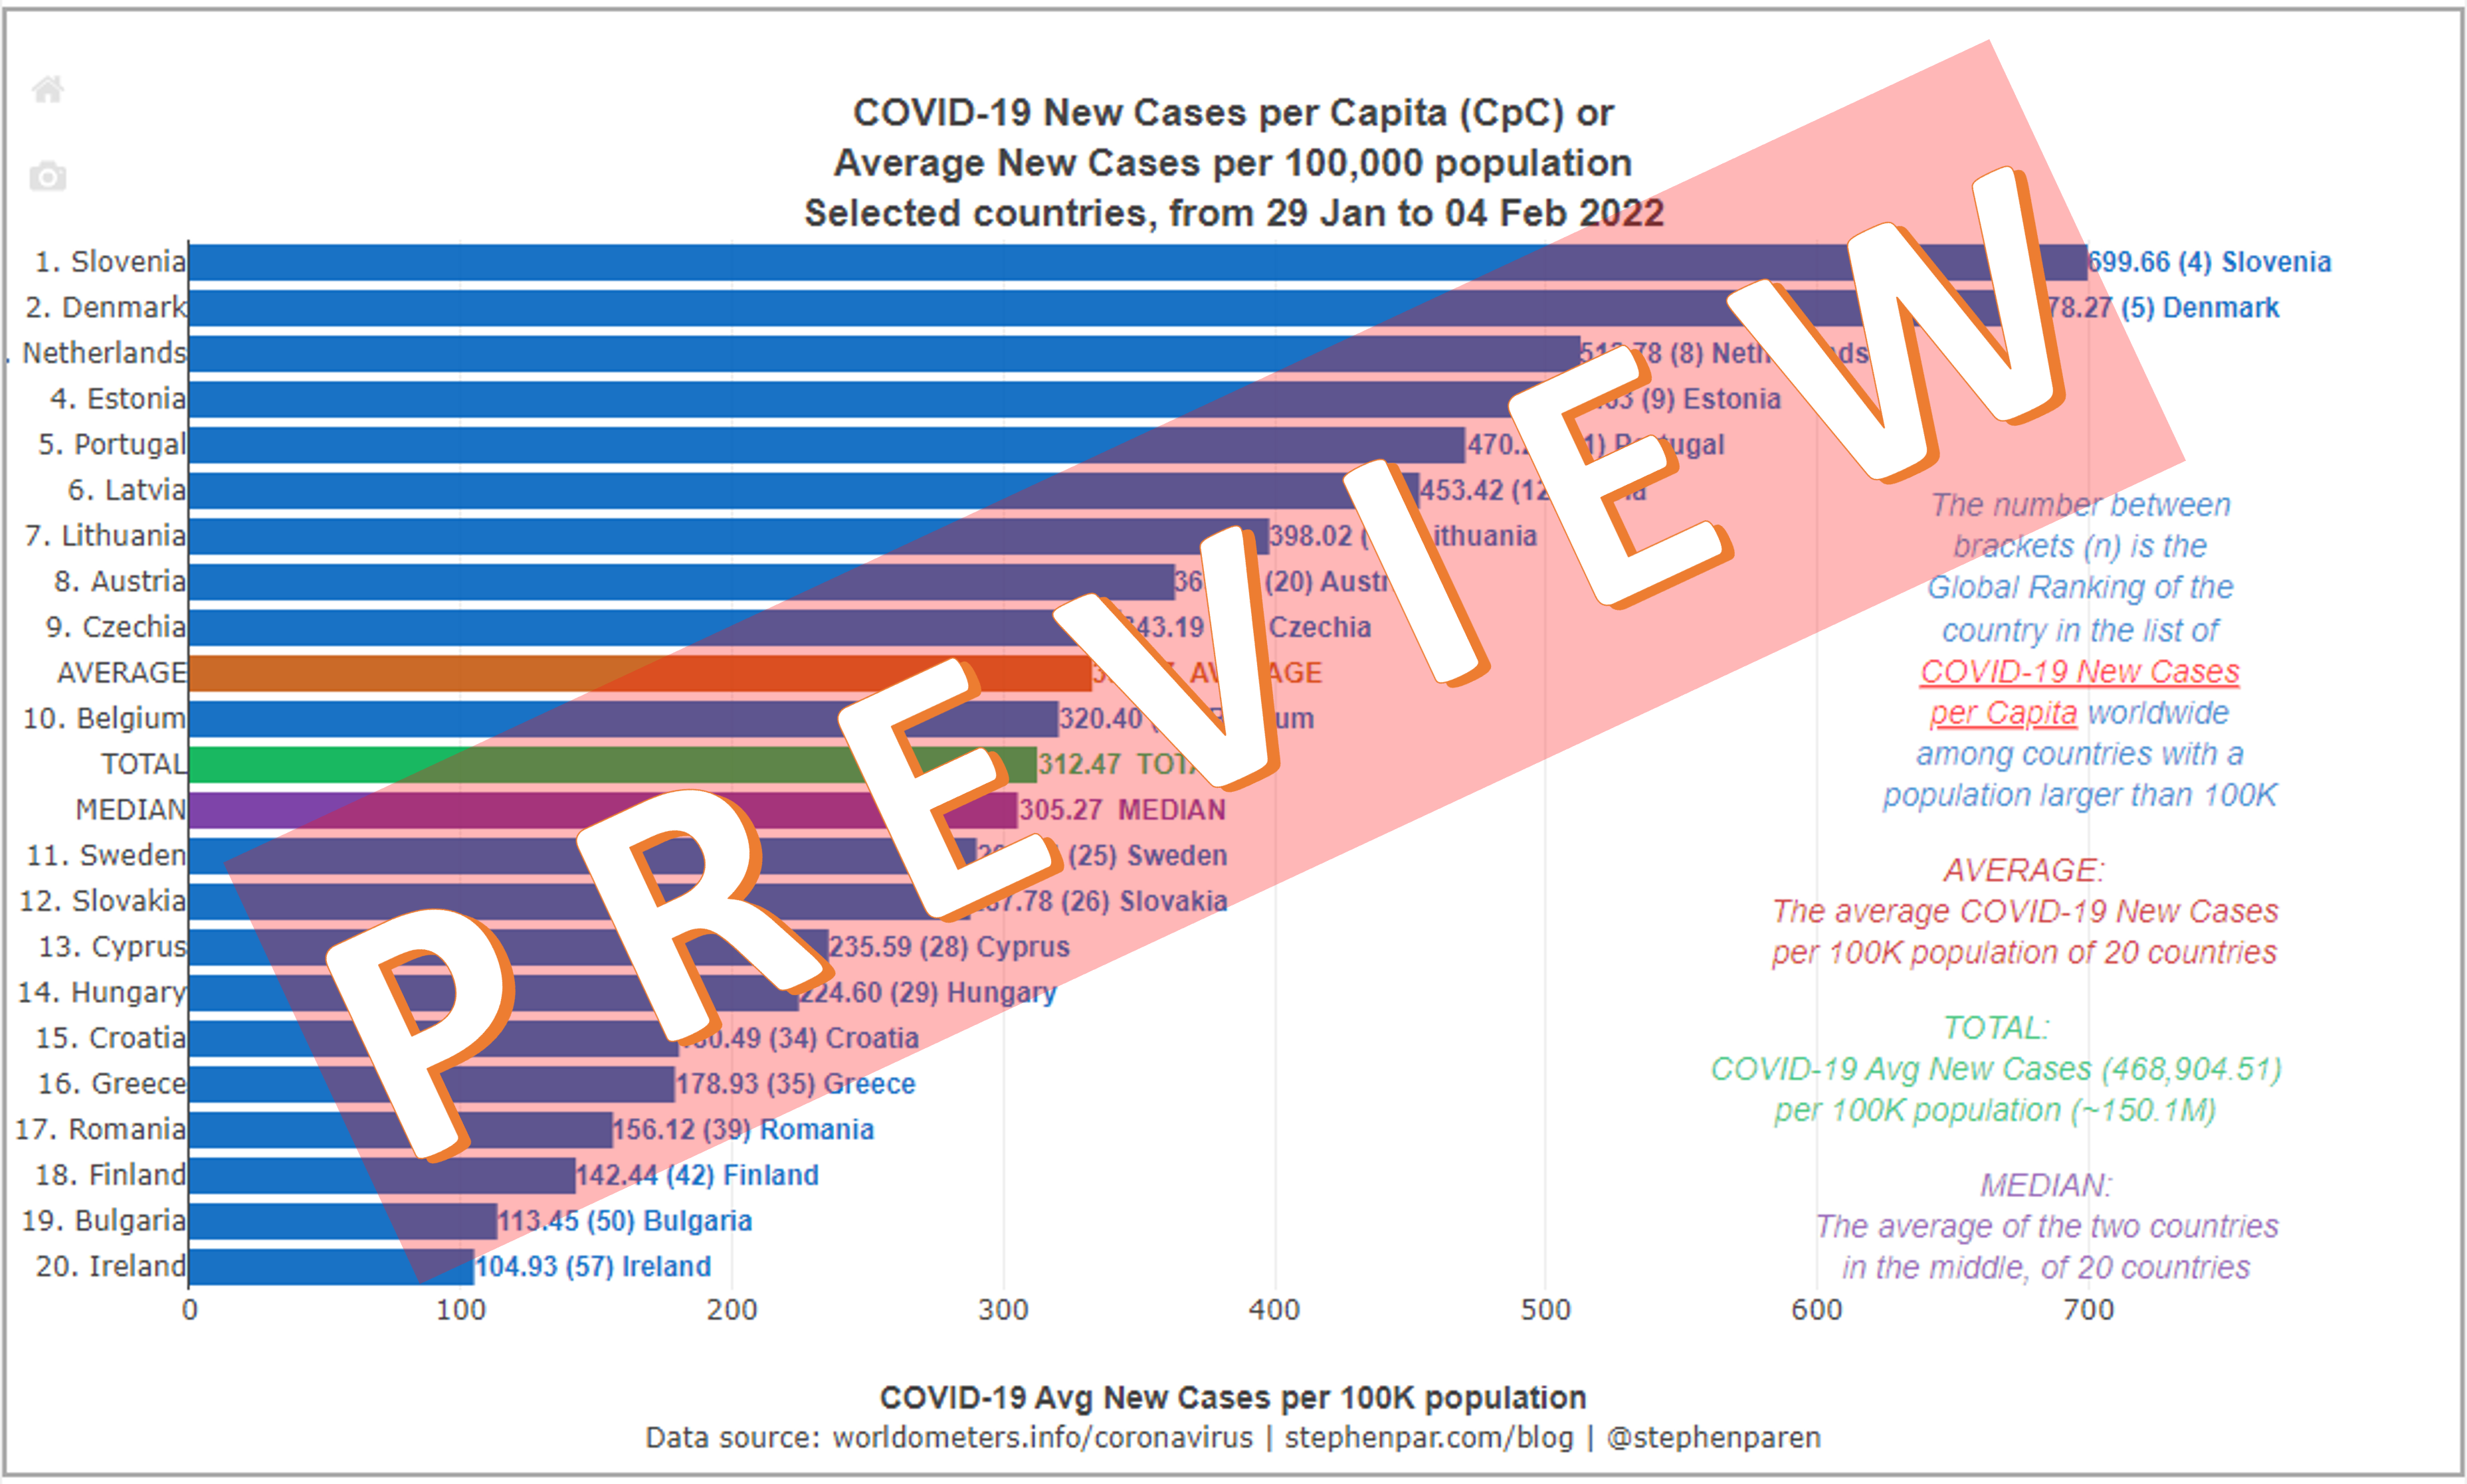 PREVIEW Average New Covid-19 Cases per Capita in EU member states with Pop 1M-20M in 7days 29Jan-04Feb2022